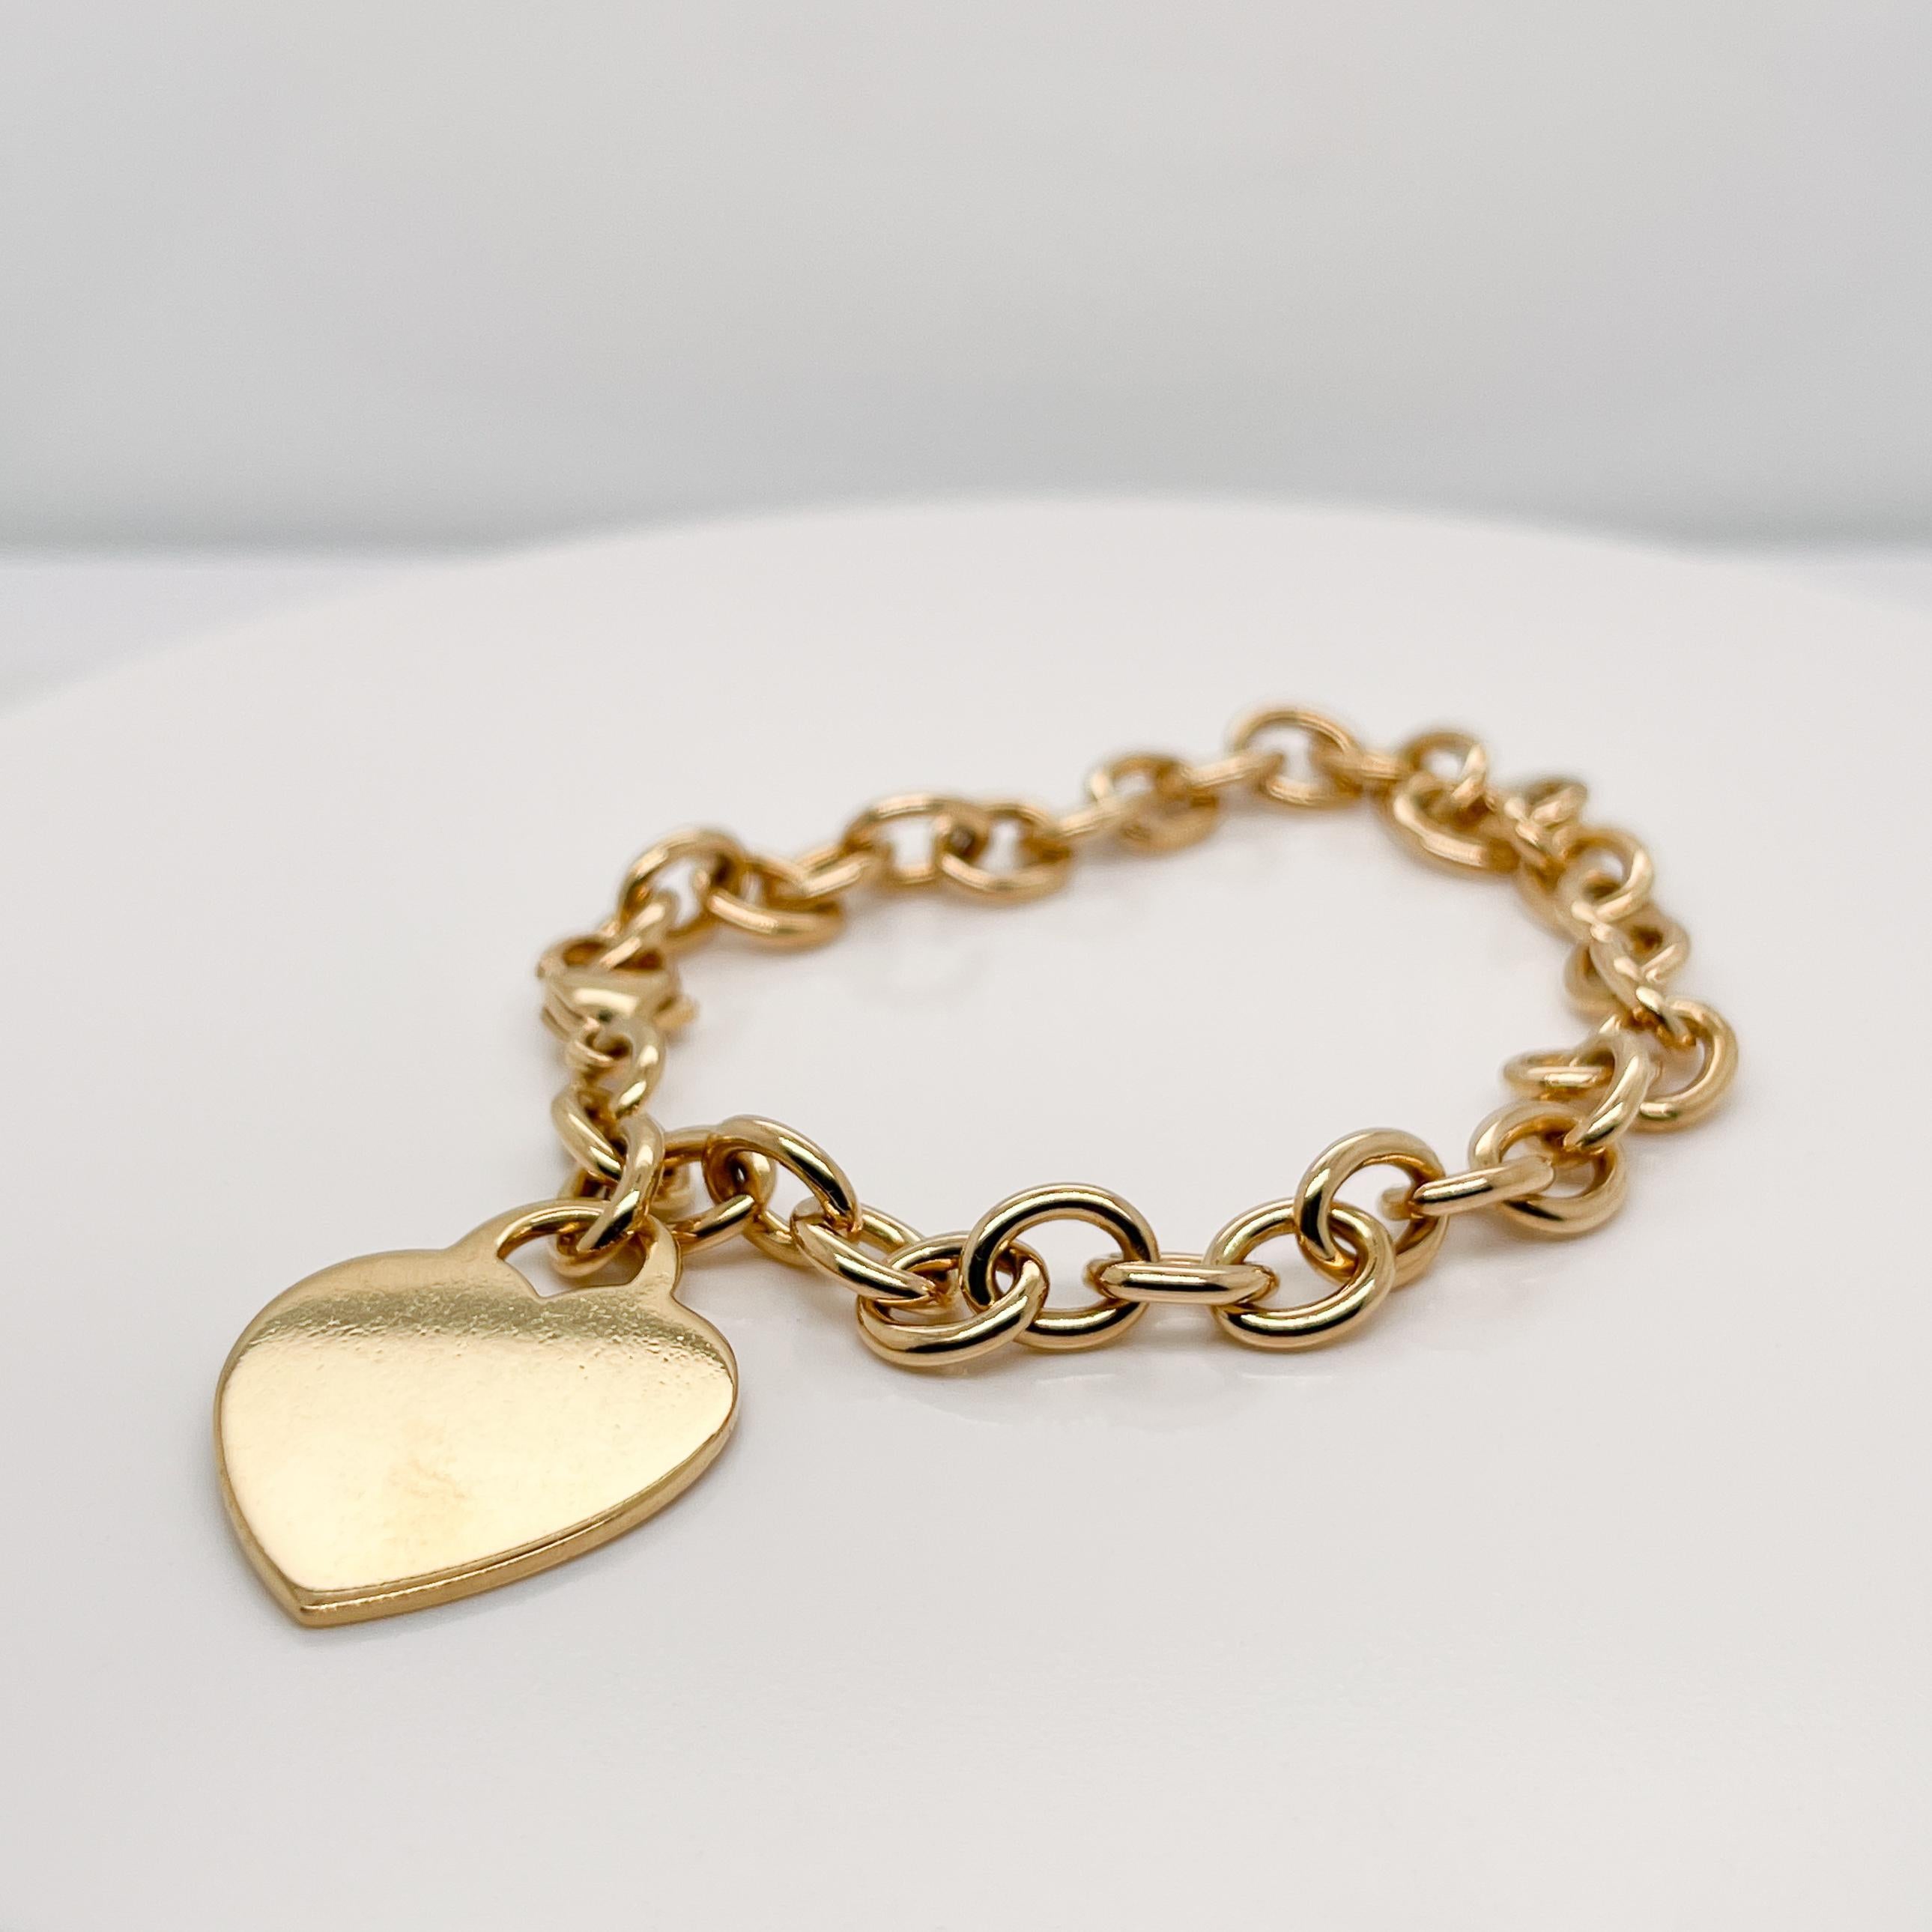 Tiffany & Co. 18 Karat Gold Dog Chain Link Bracelet & Heart Charm For Sale 1